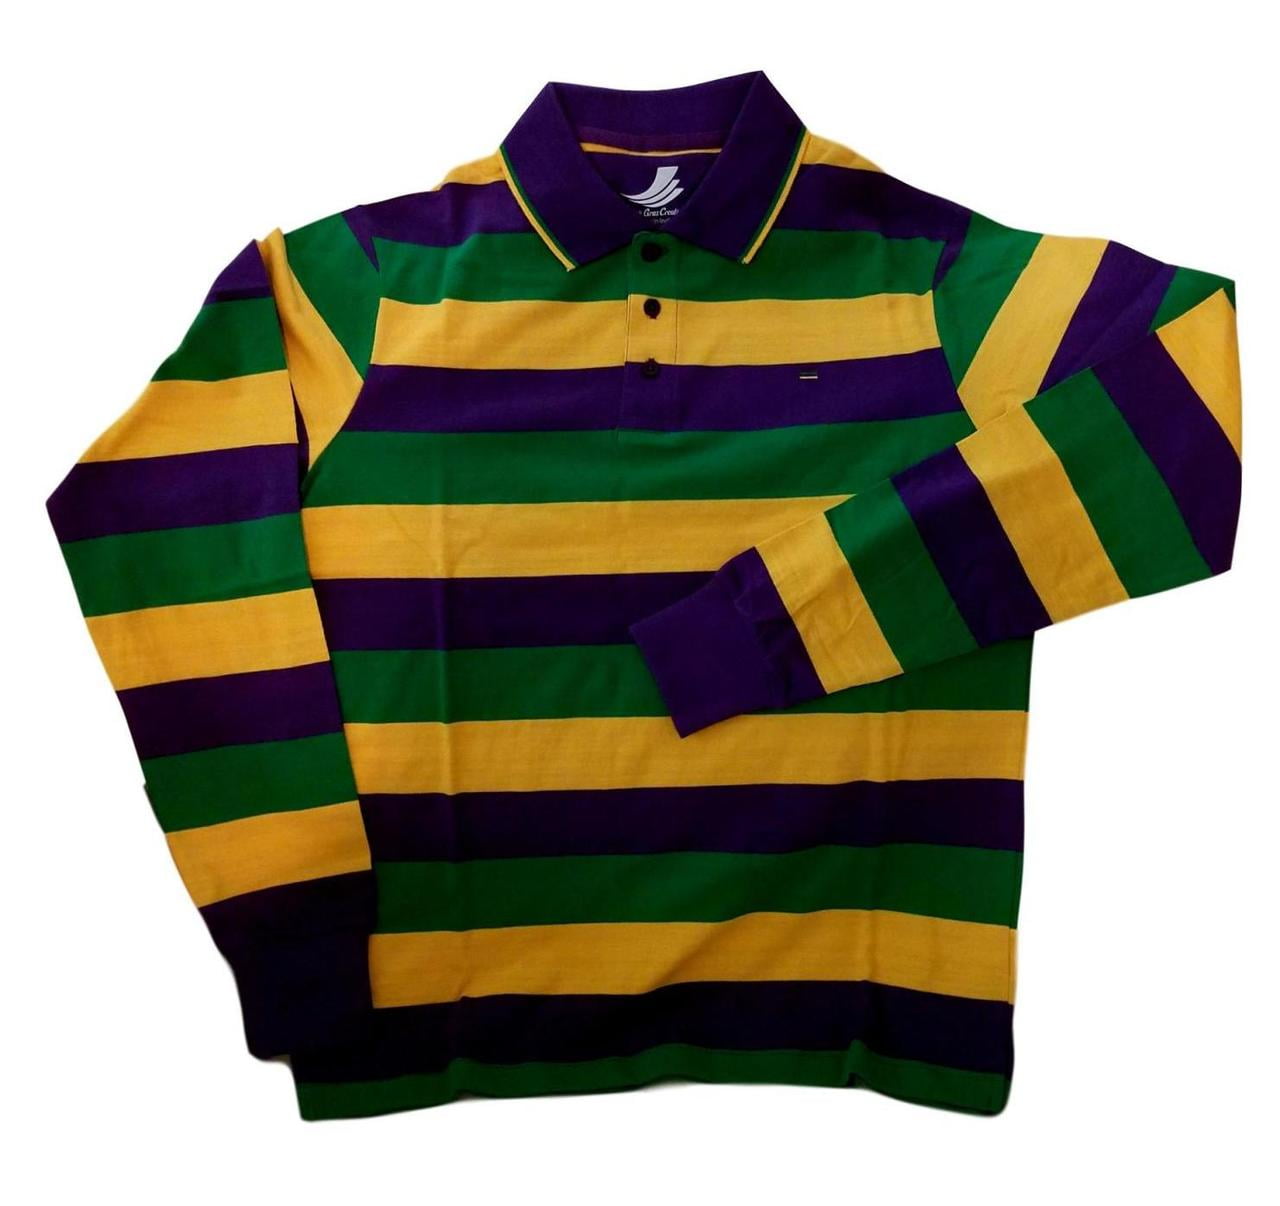 PUTIEN Mardi Gras Girl Regular-Fit Short-Sleeve Shirt,Personality Pattern,Colorful Band